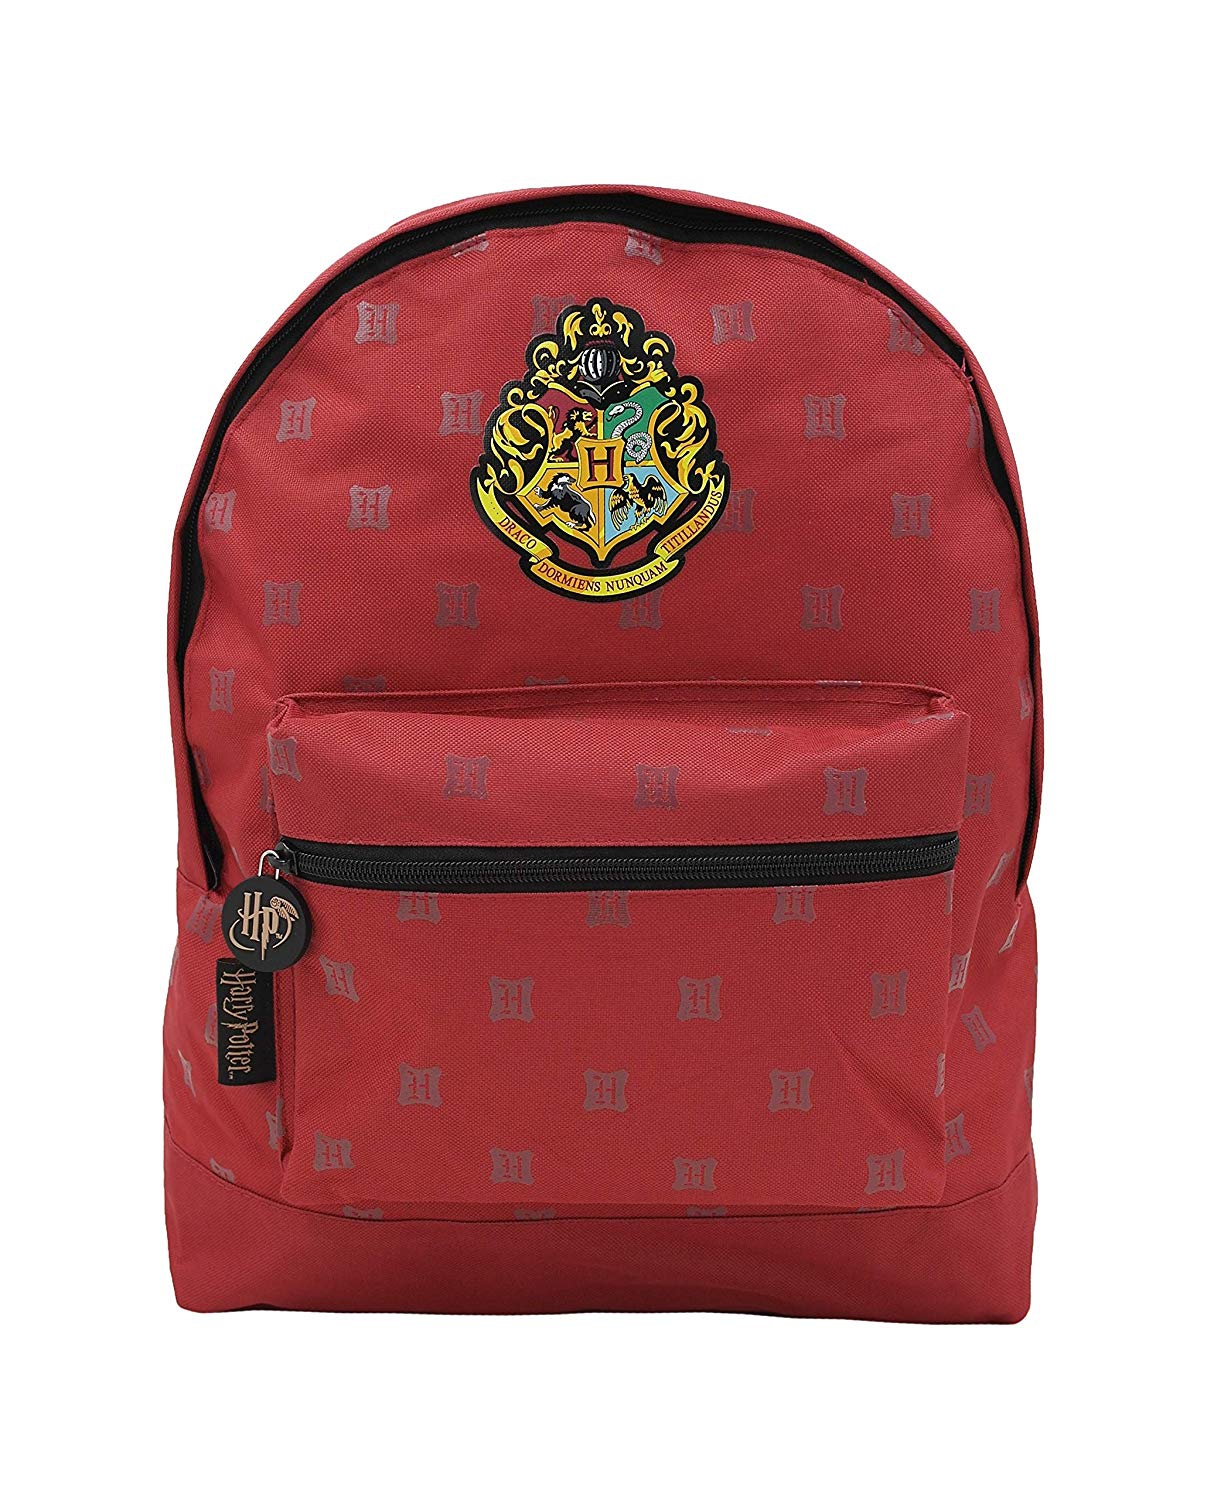 Harry Potter Roxy School Bag Rucksack Backpack